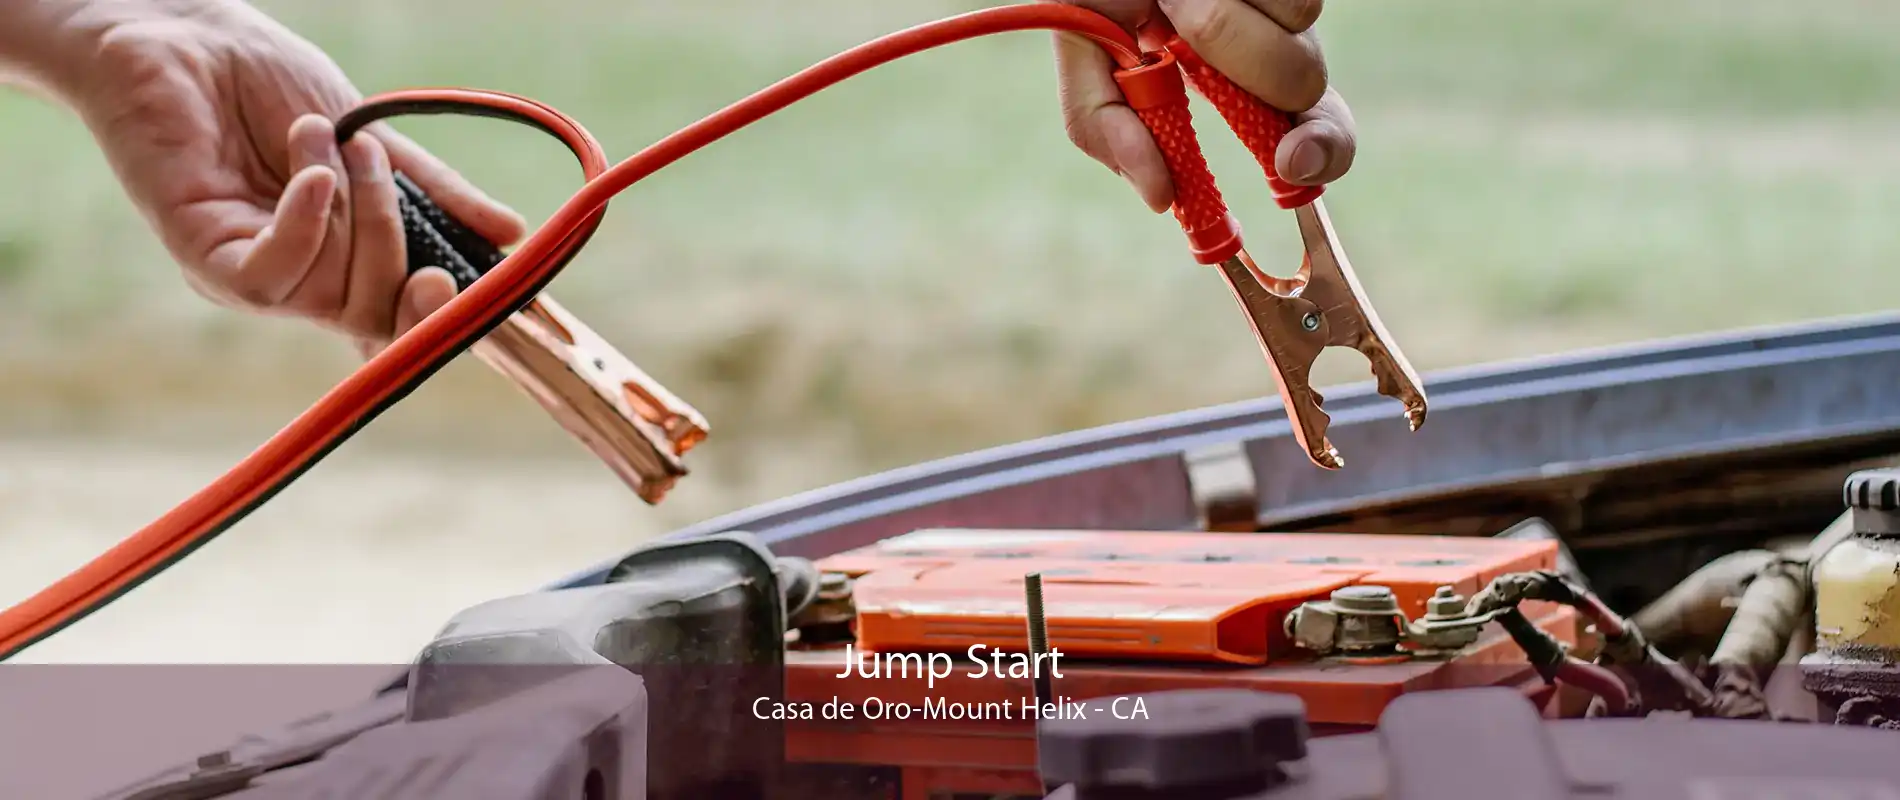 Jump Start Casa de Oro-Mount Helix - CA